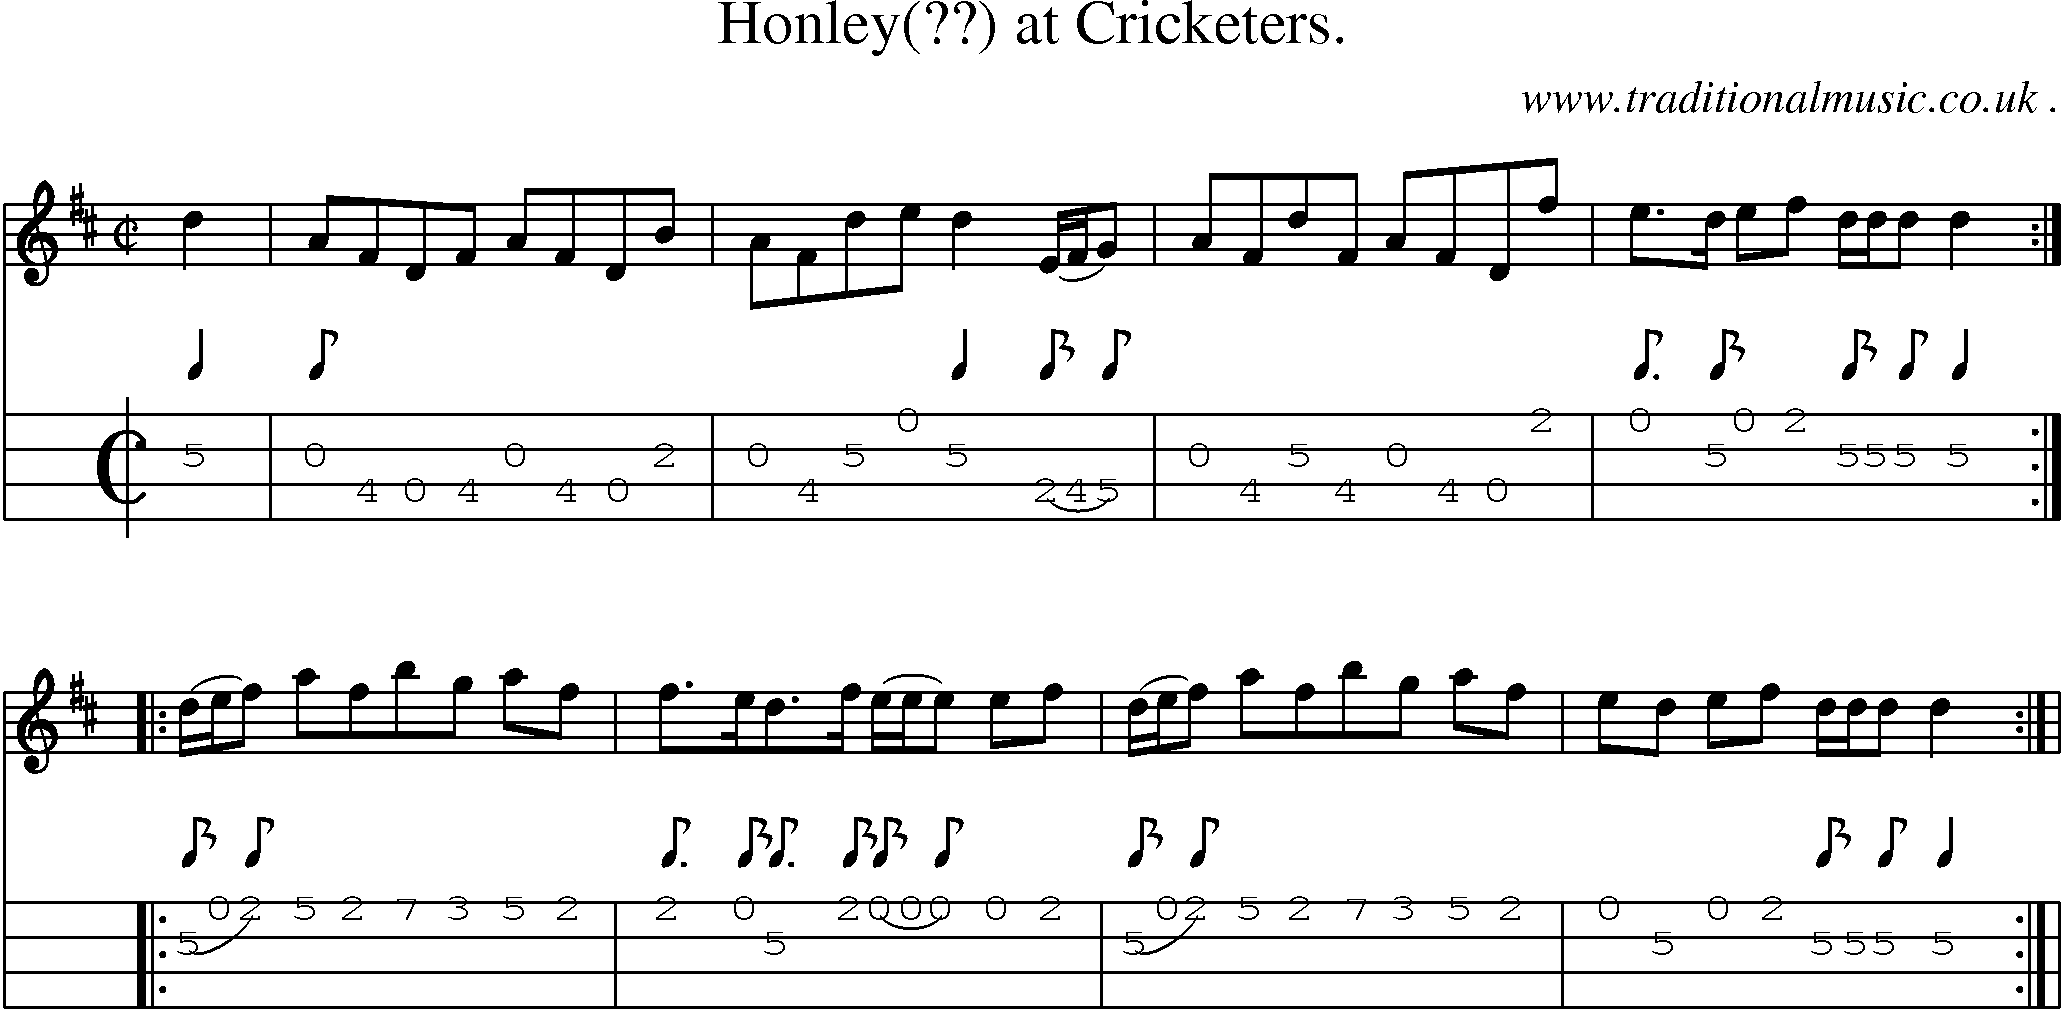 Sheet-Music and Mandolin Tabs for Honley At Cricketers